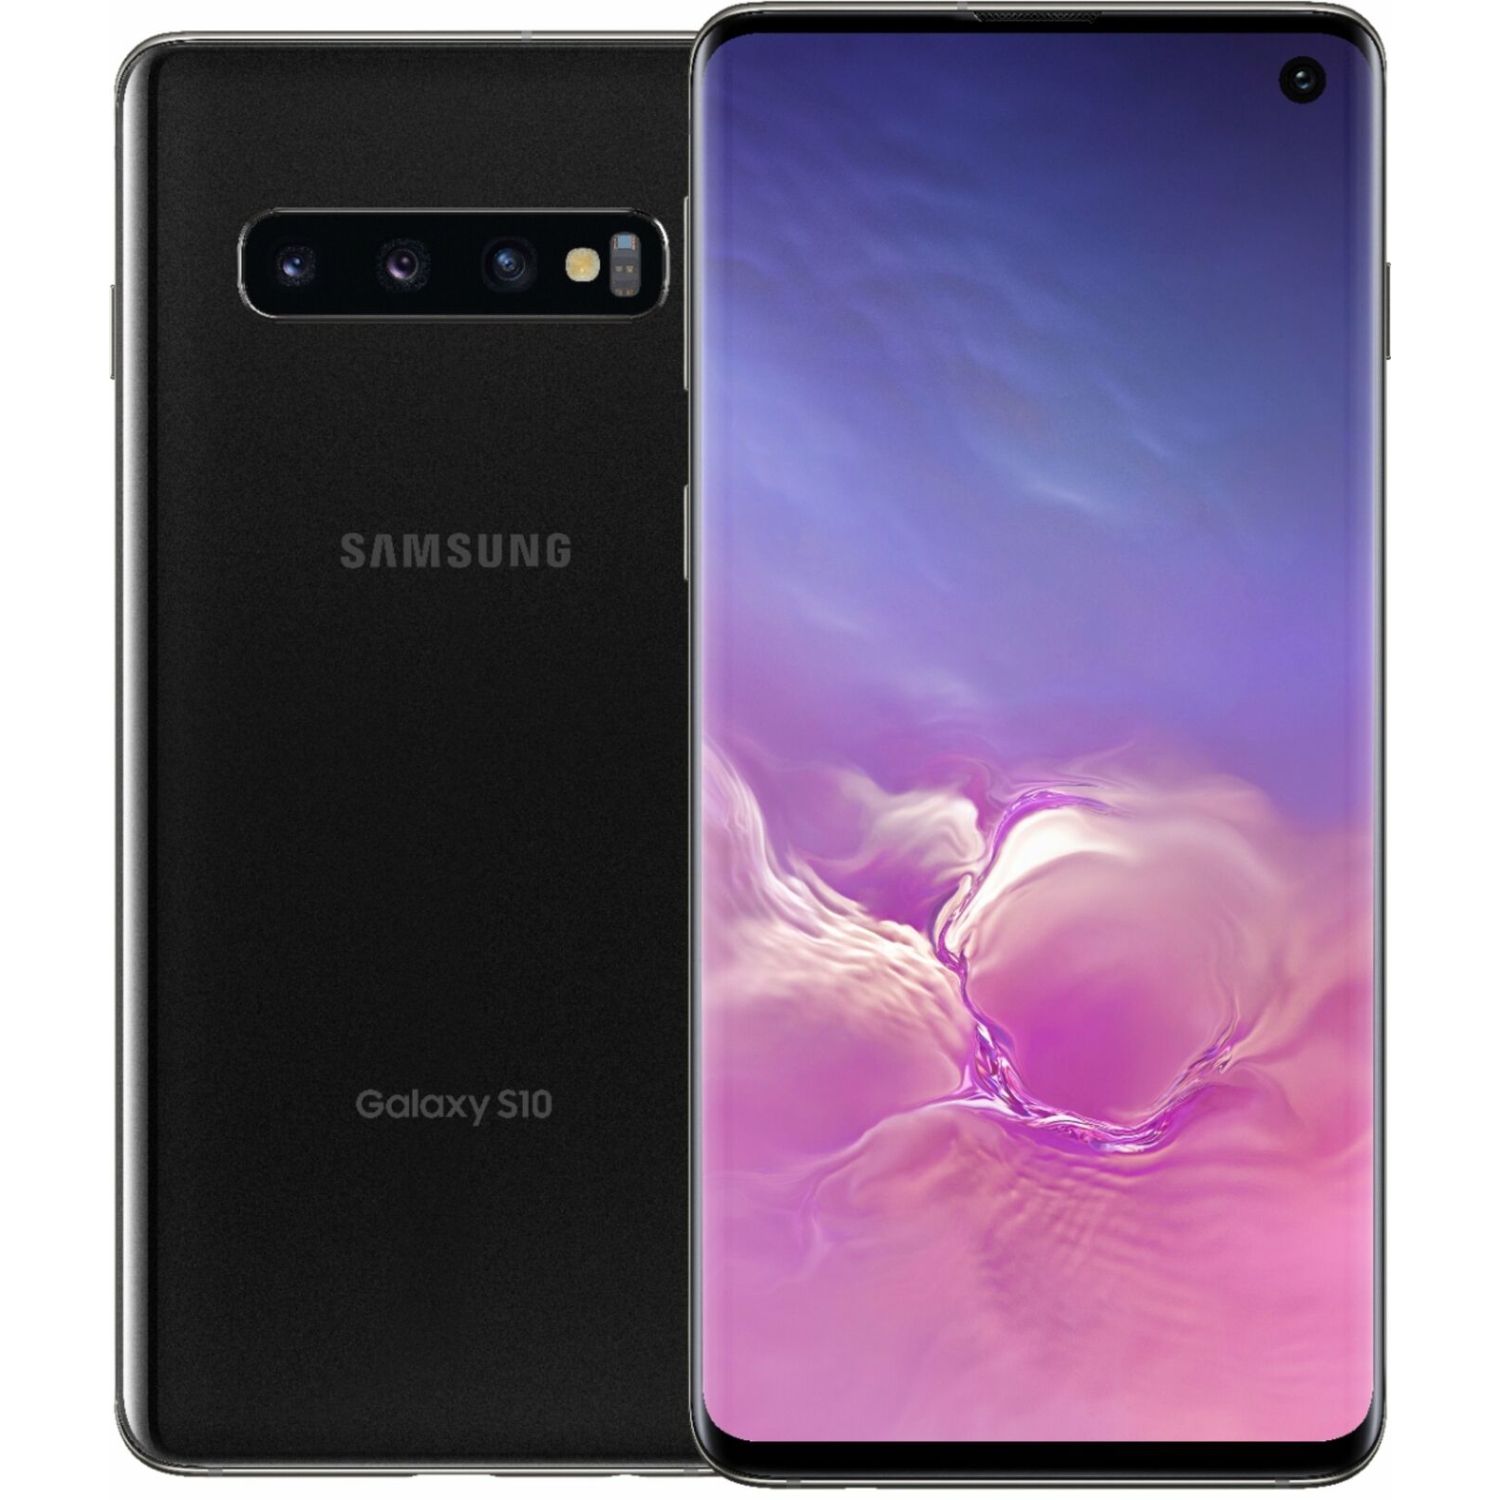 Samsung Galaxy S10 Plus 128GB (SM-G975U) - Prism Black - GSM Unlocked Smartphone - International Model - Open Box